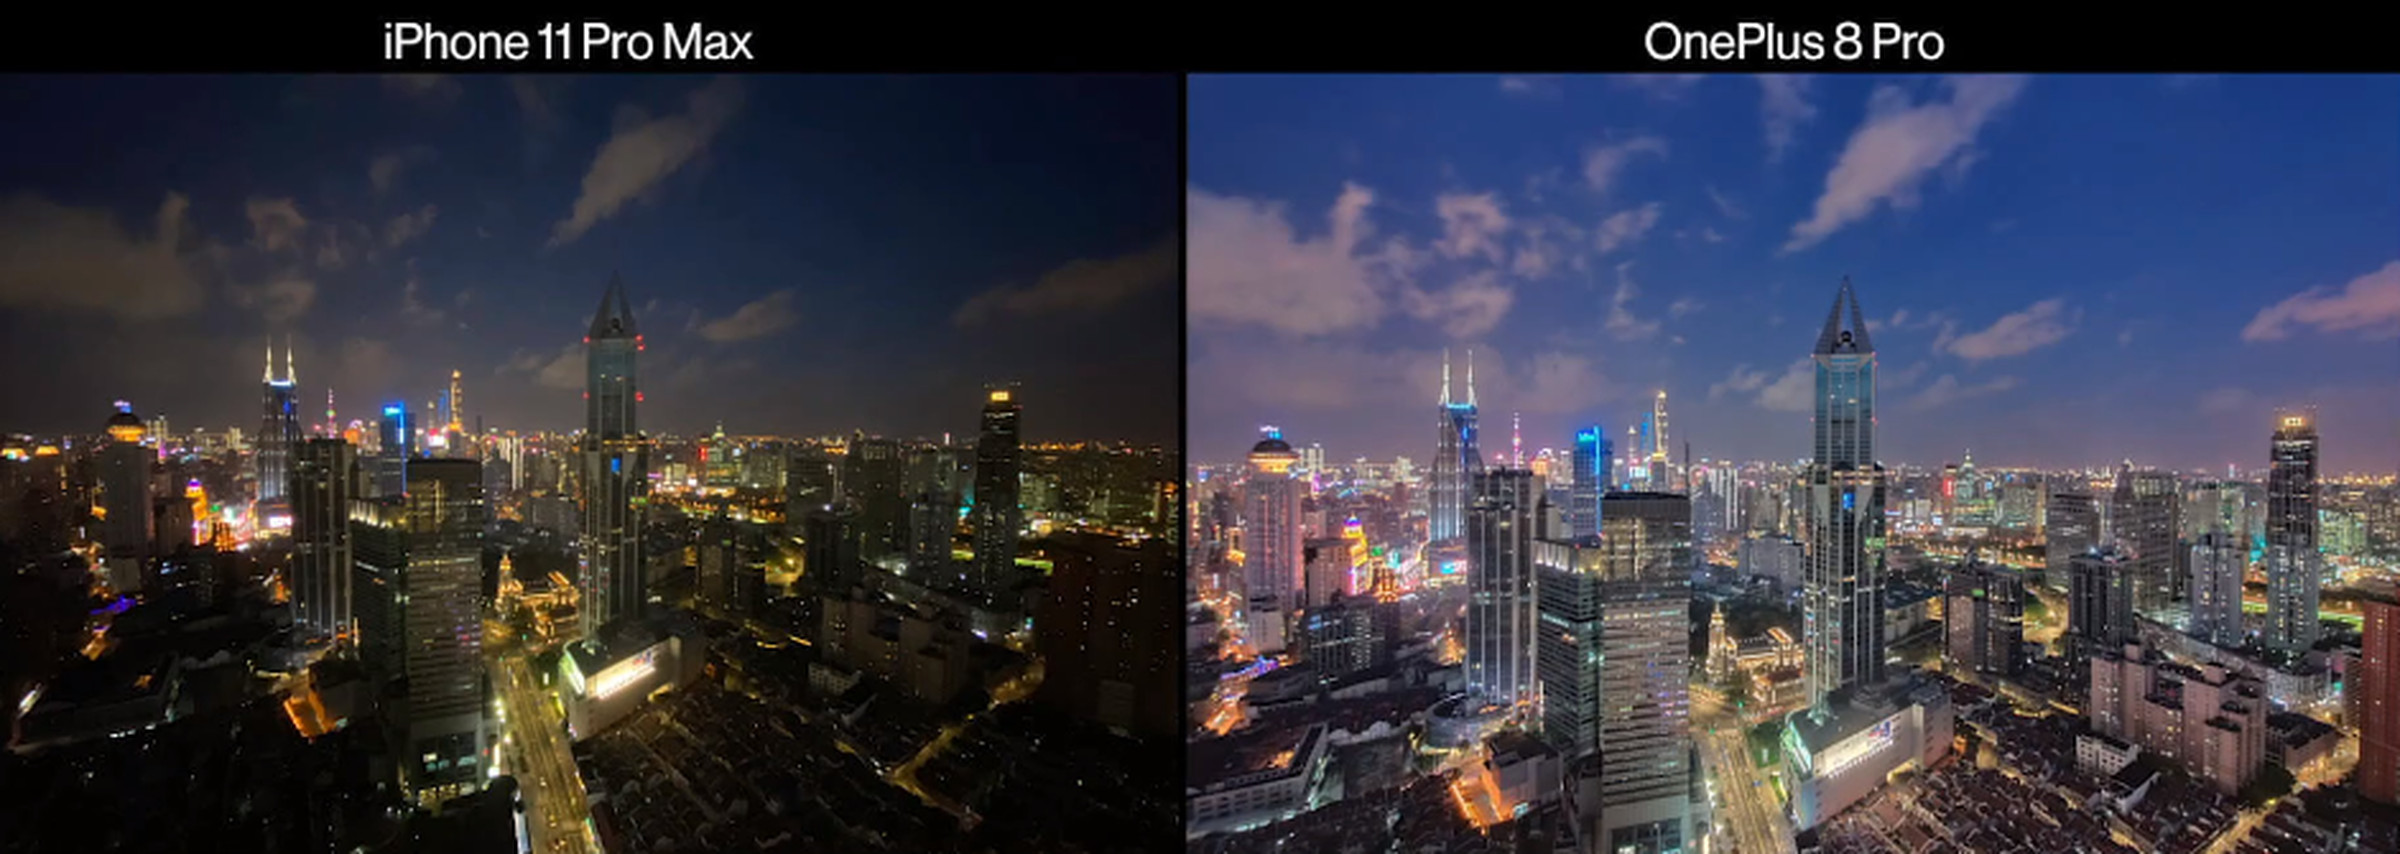 OnePlus’ image comparison.